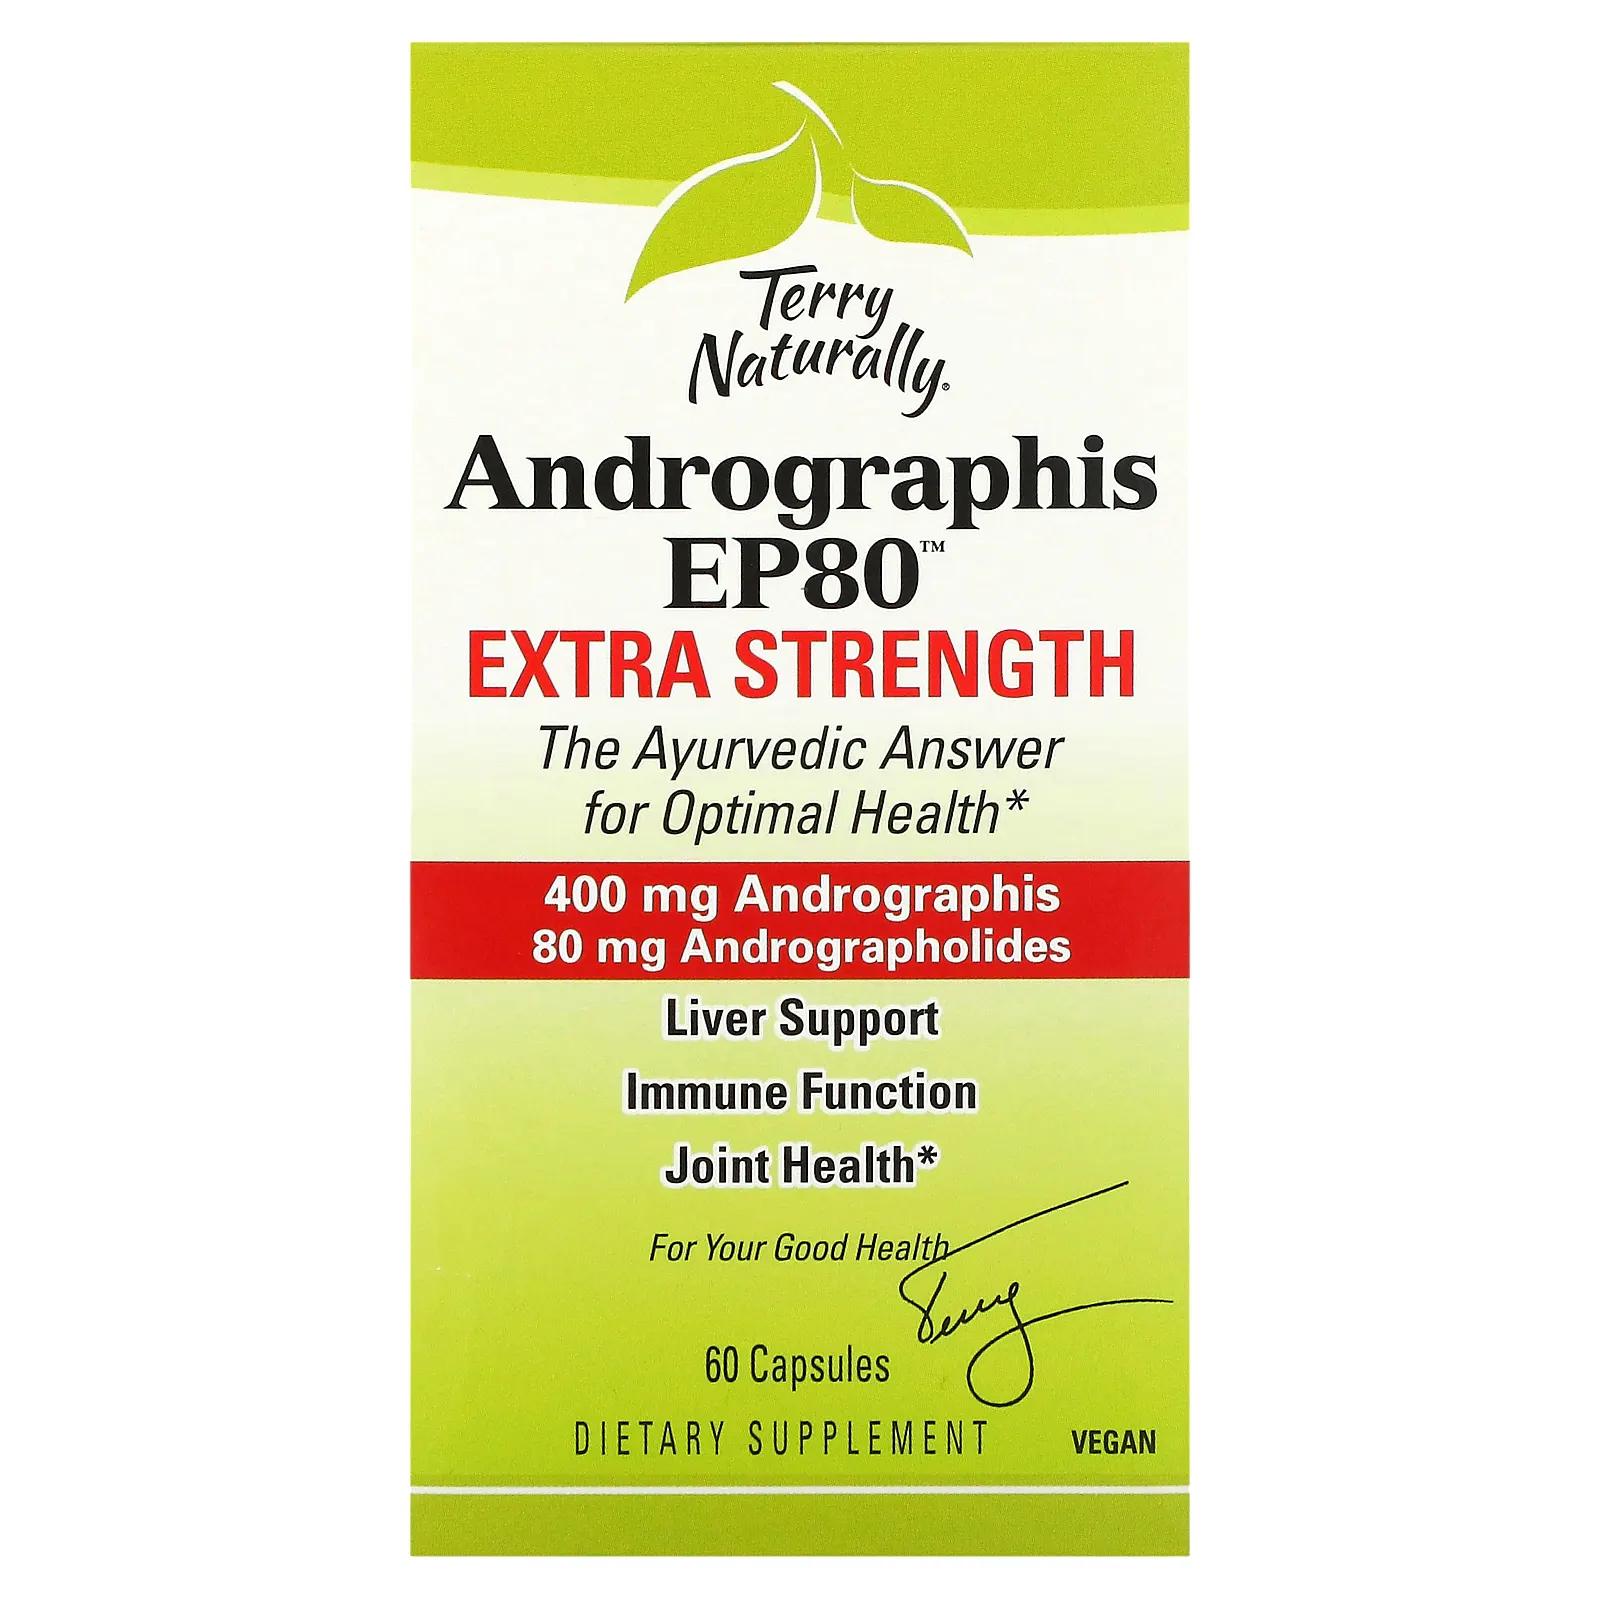 Terry Naturally Andrographis EP80 Extra Strength 60 Capsules terry naturally терри нэтуралли снятие раздражительности 45 таблеток